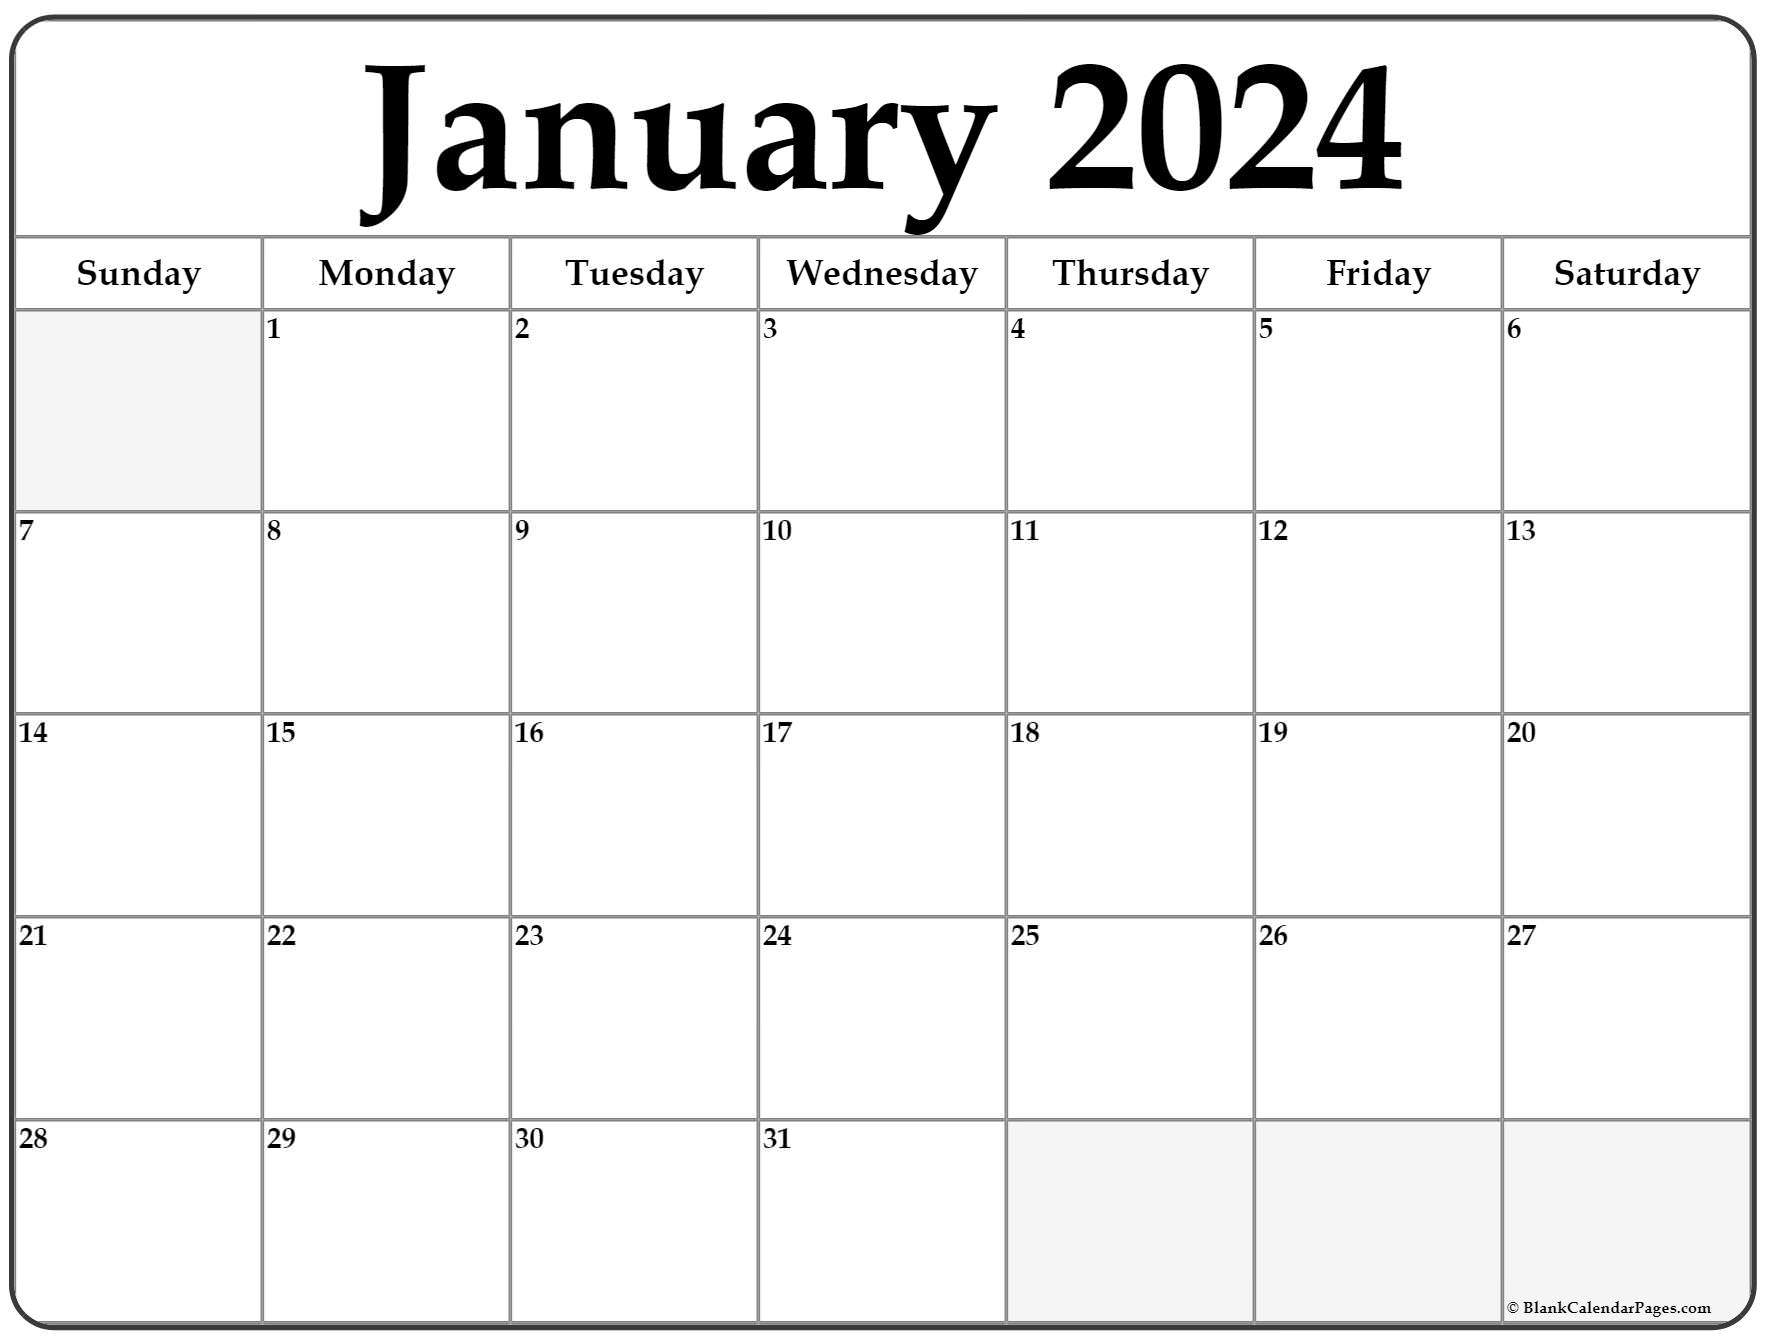 2023 Calendar Templates And Images Printable 2023 Calendars Pdf 